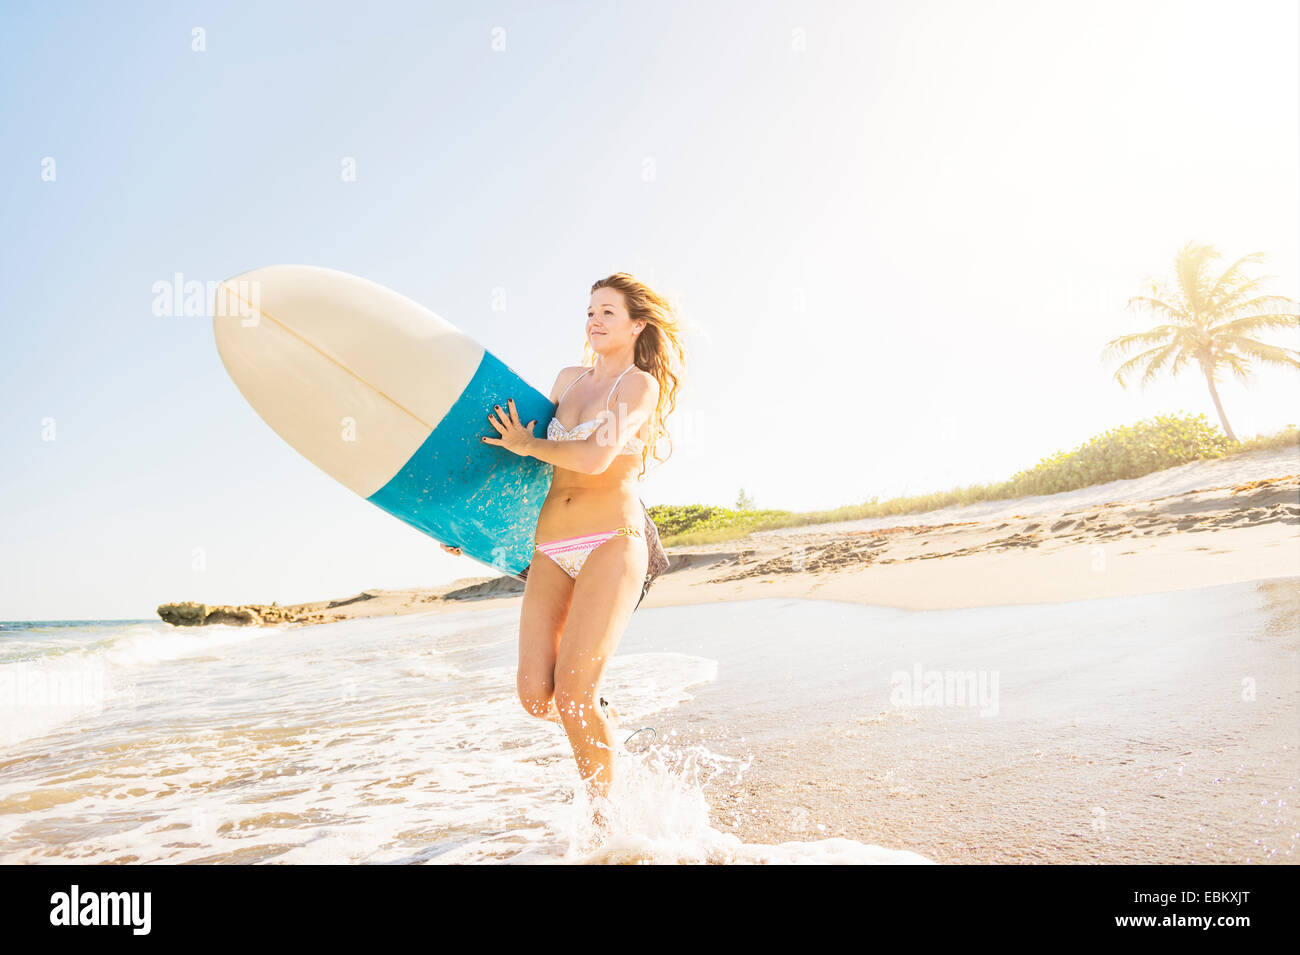 USA, Floride, Jupiter, young woman running in surf surfboard comptable dans la mer Banque D'Images